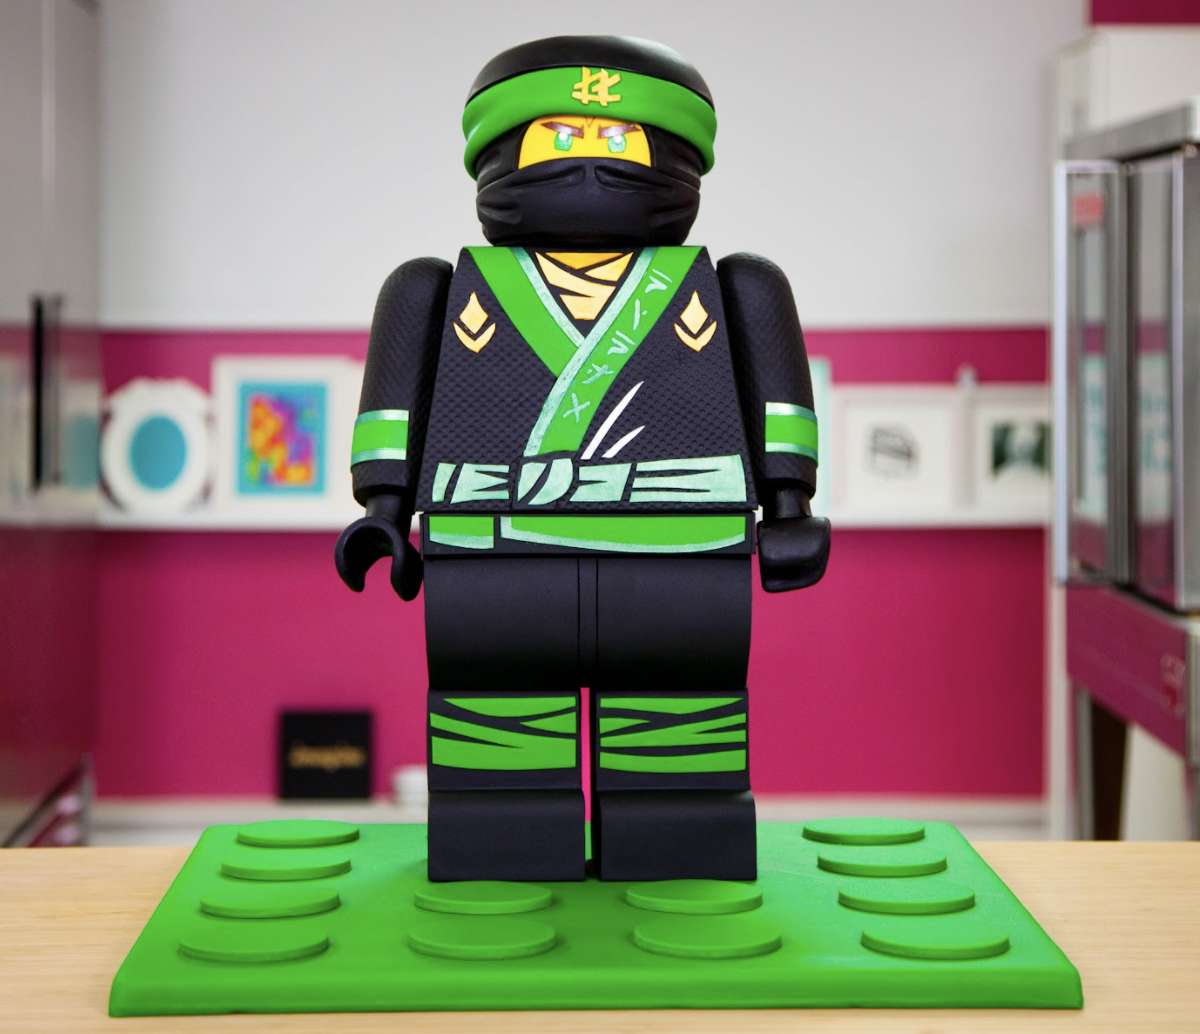 Lego Ninjago Cake – Etoile Bakery